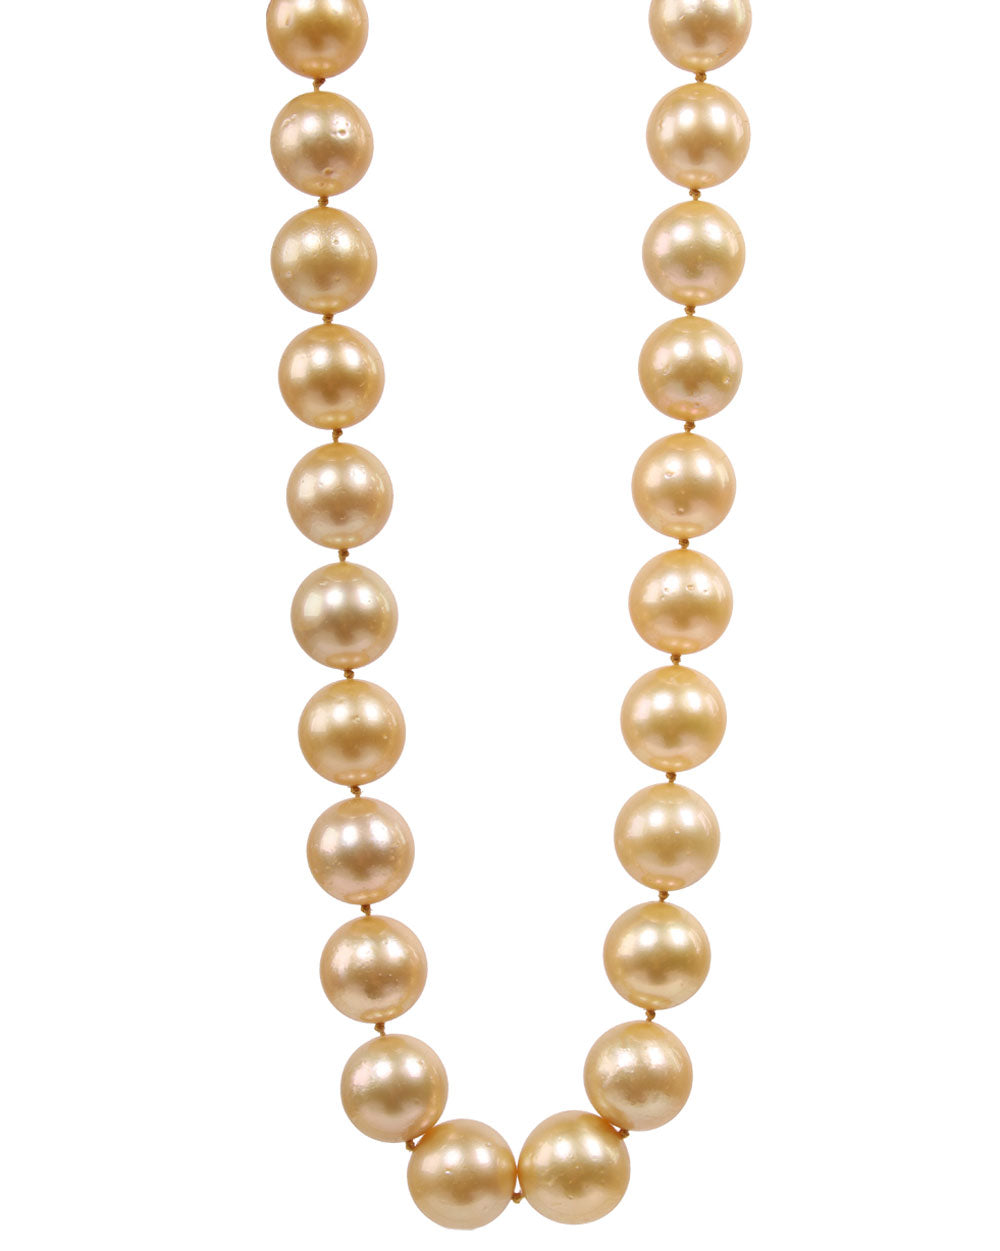 Golden Sea Pearl Necklace